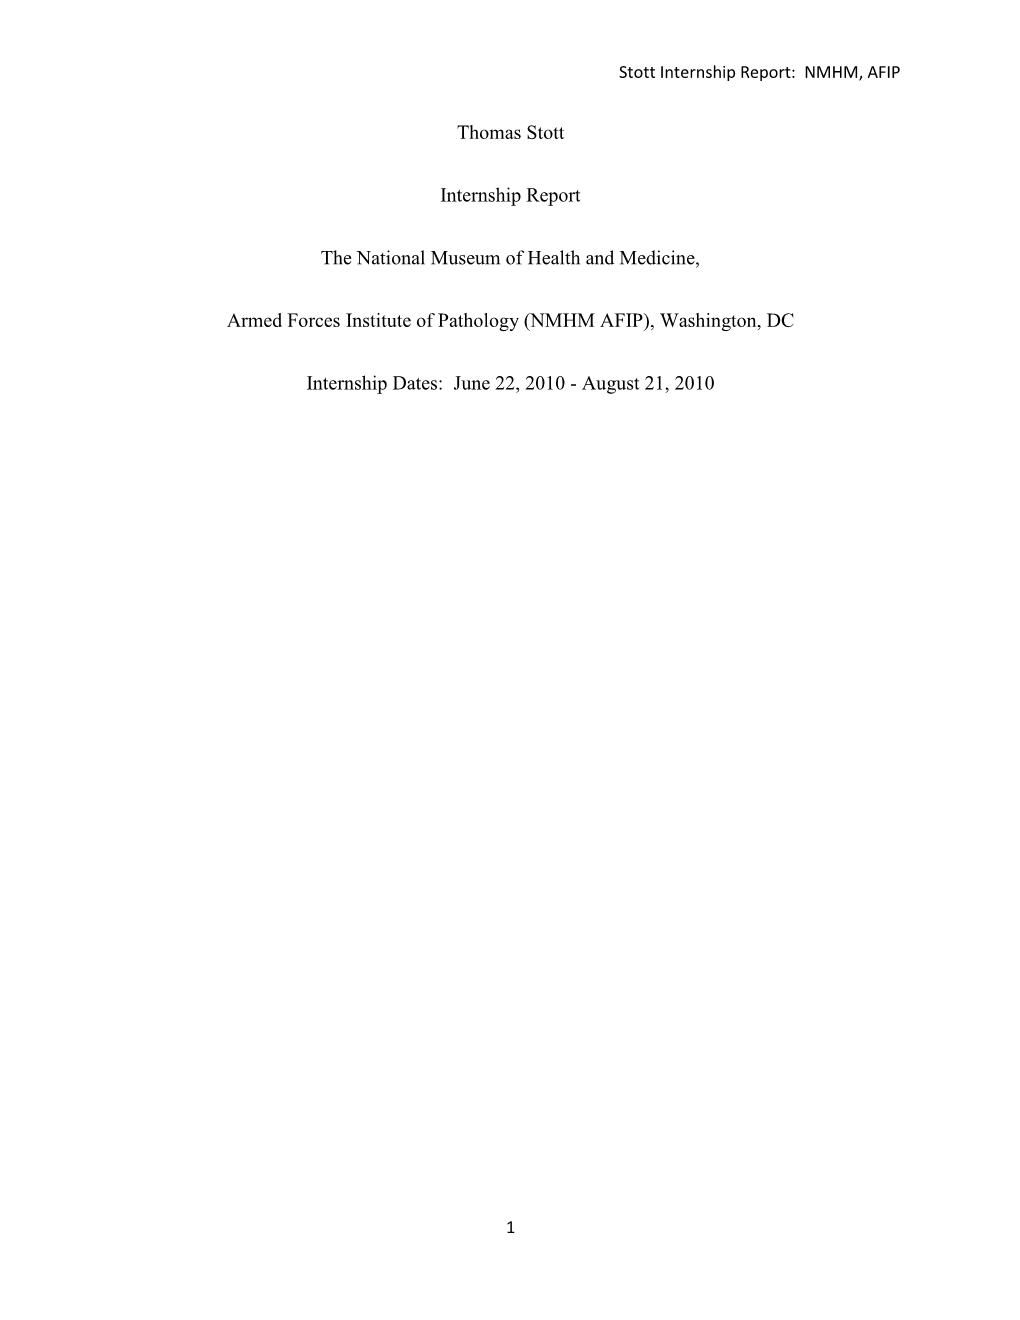 Thomas Internship Report Final (Edited).Docx